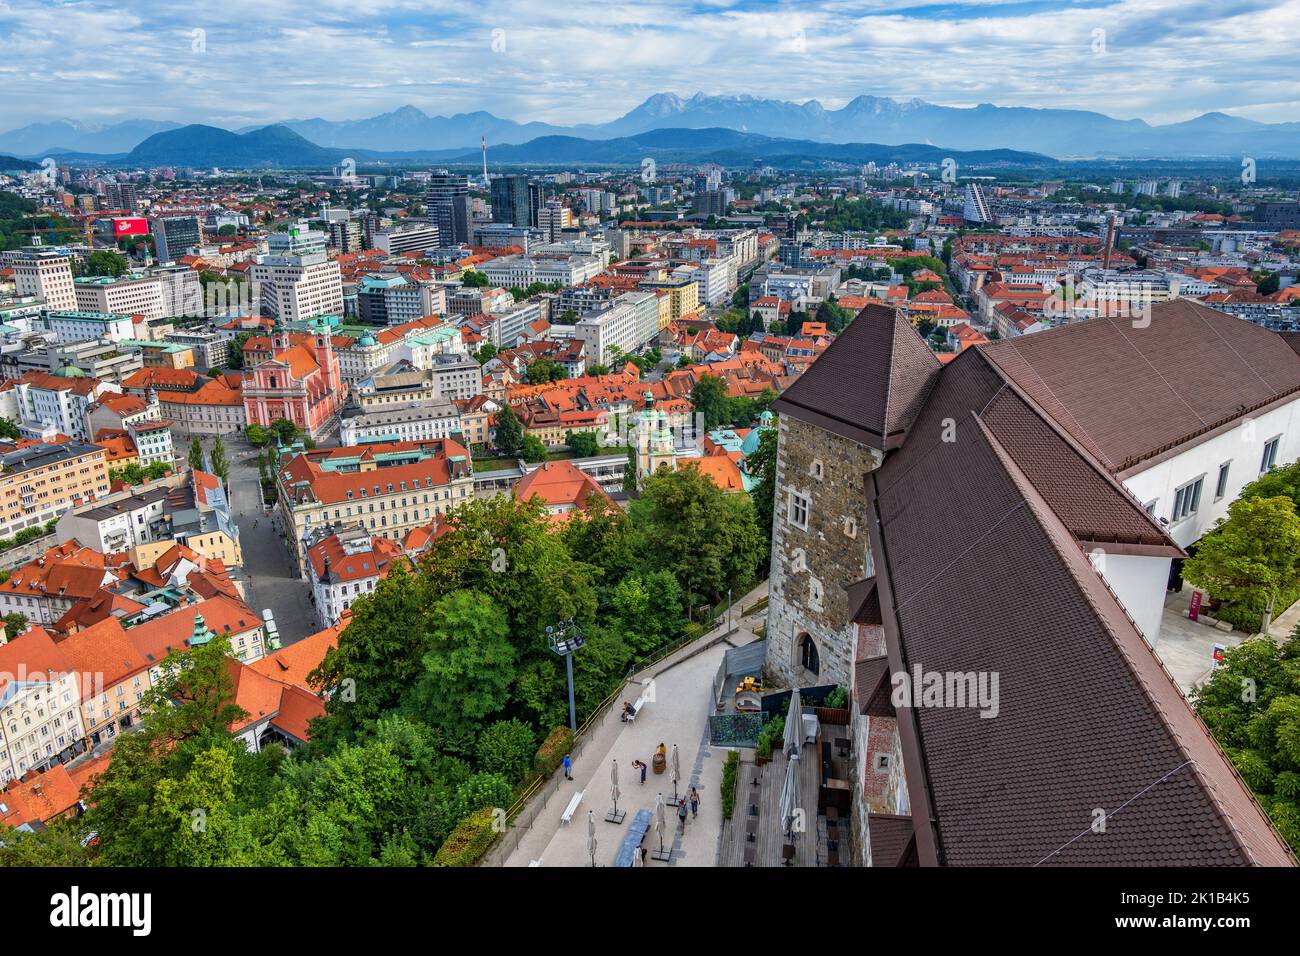 City of Ljubljana in Slovenia, cityscape with the Old Town and Ljubljana Castle, historic city centre. Stock Photo